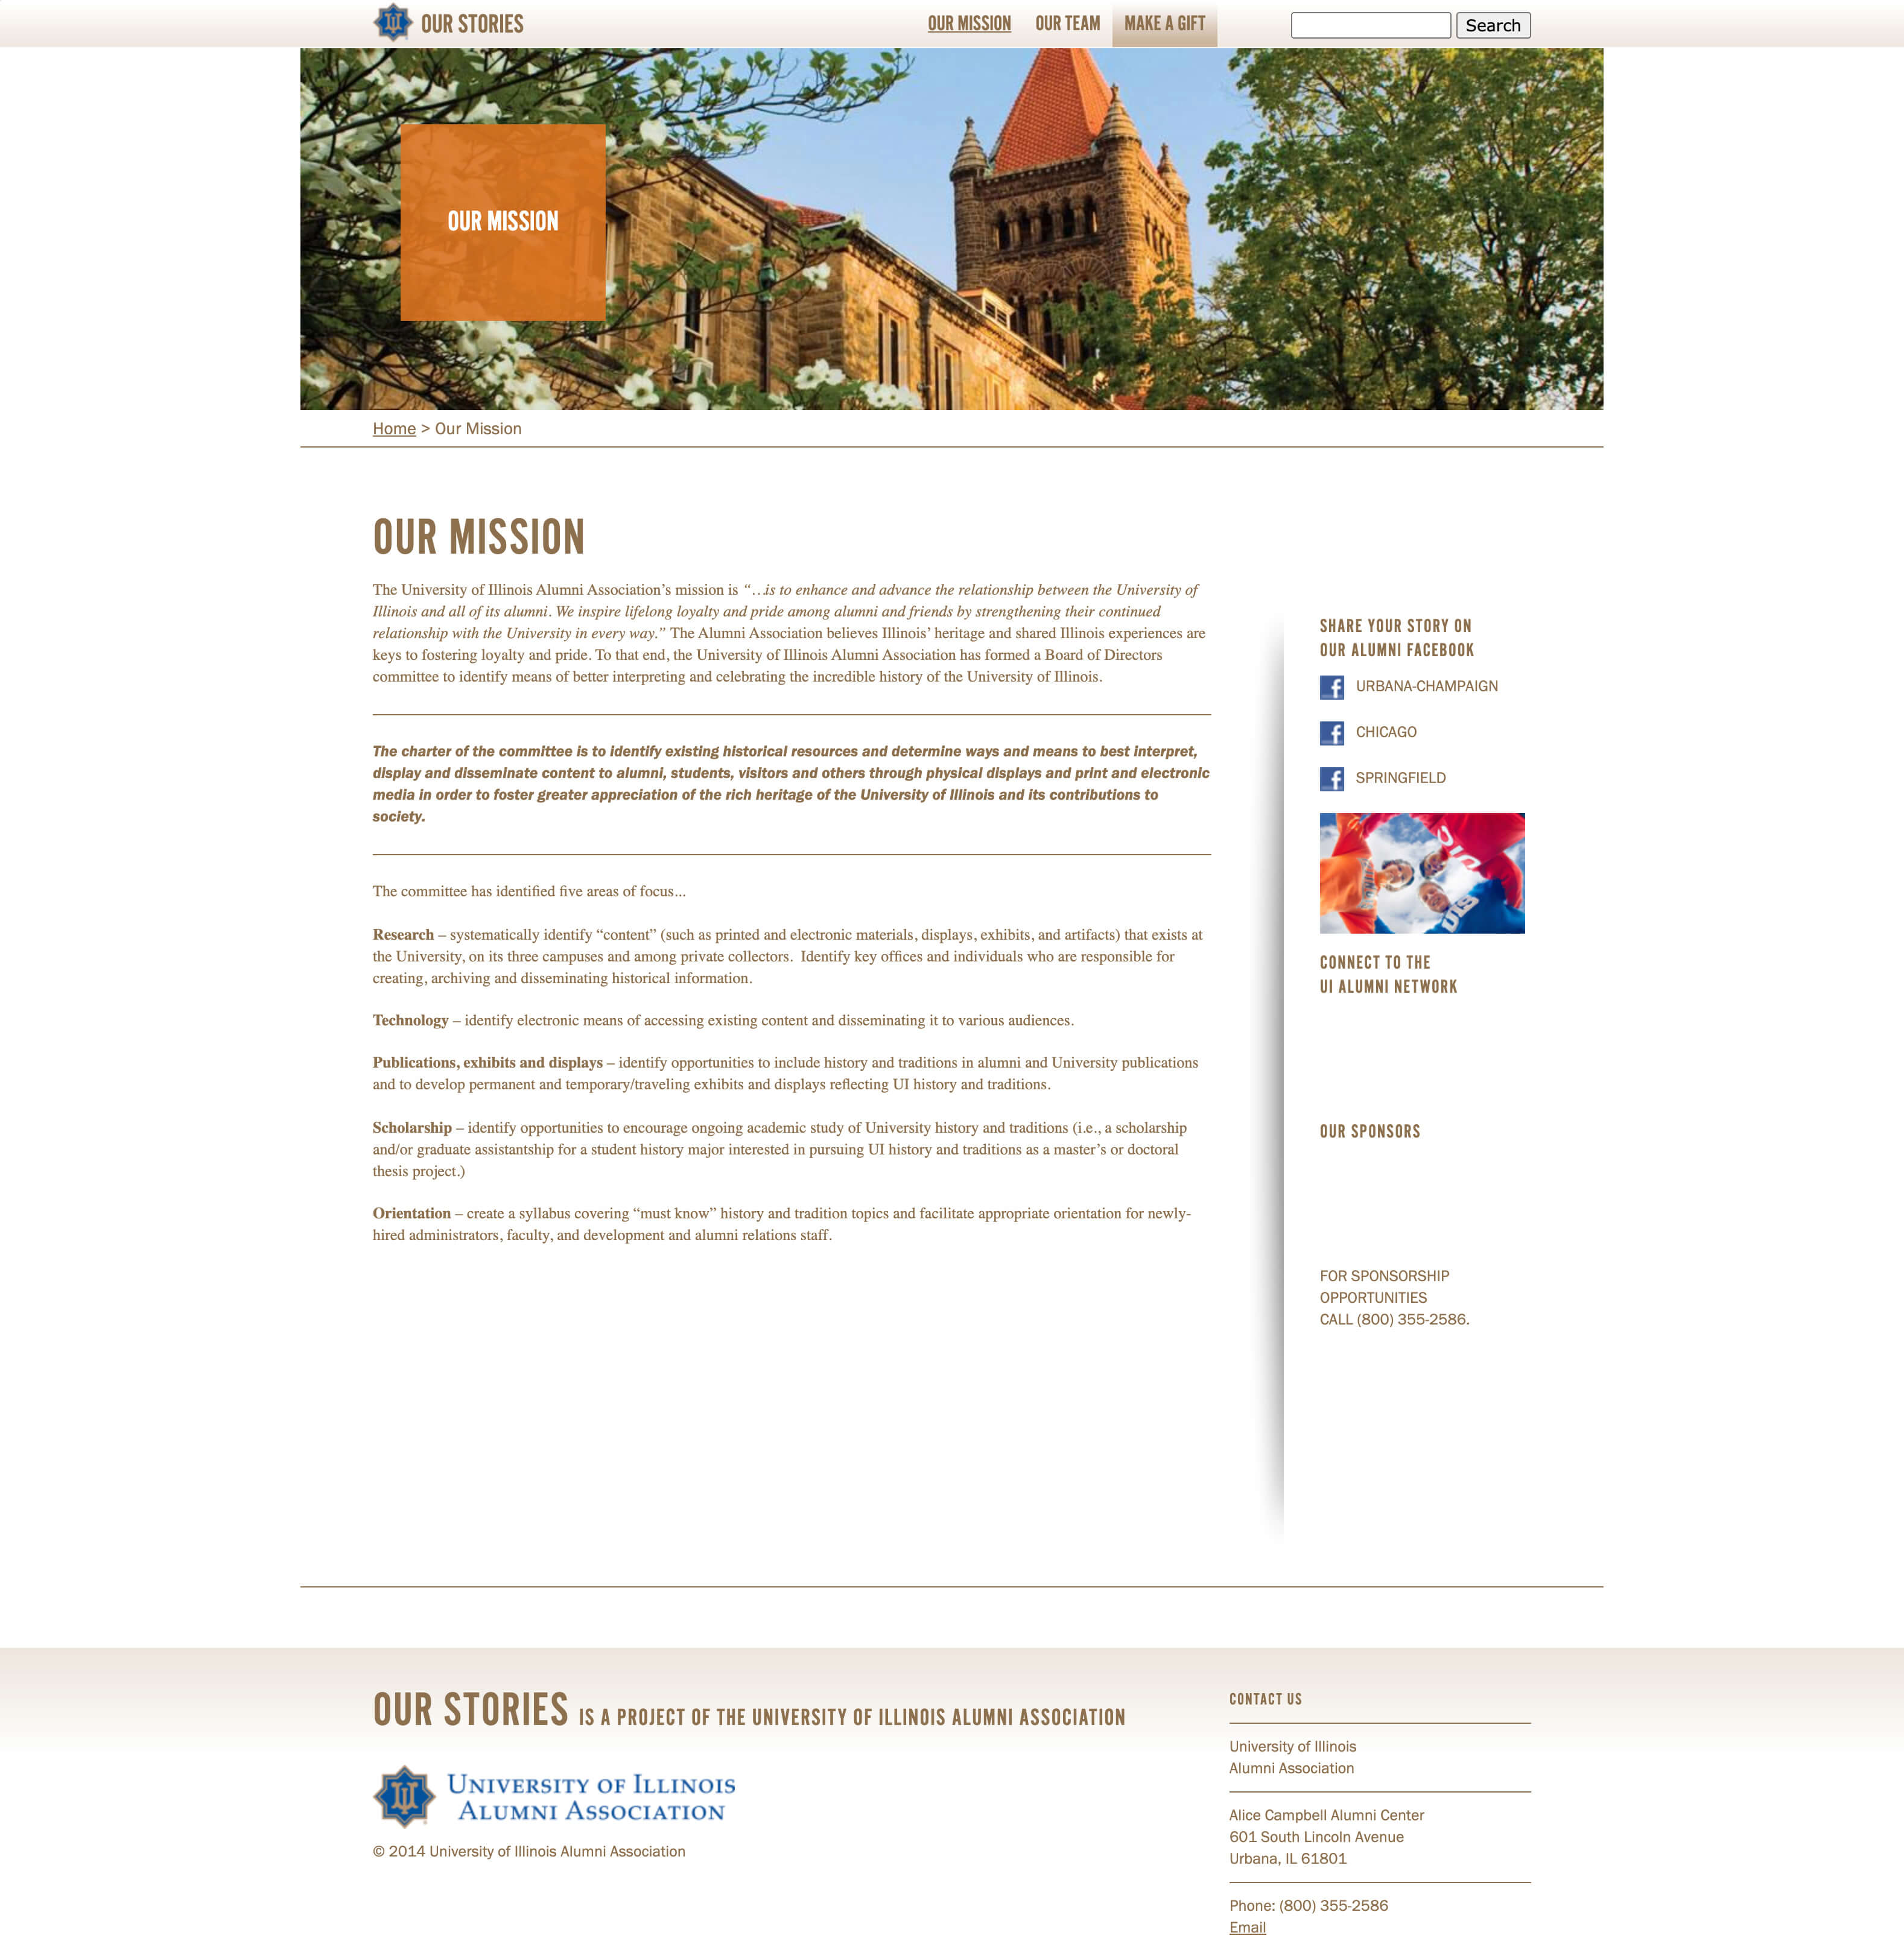 University of Illinois Alumni Association - Our Stories Website